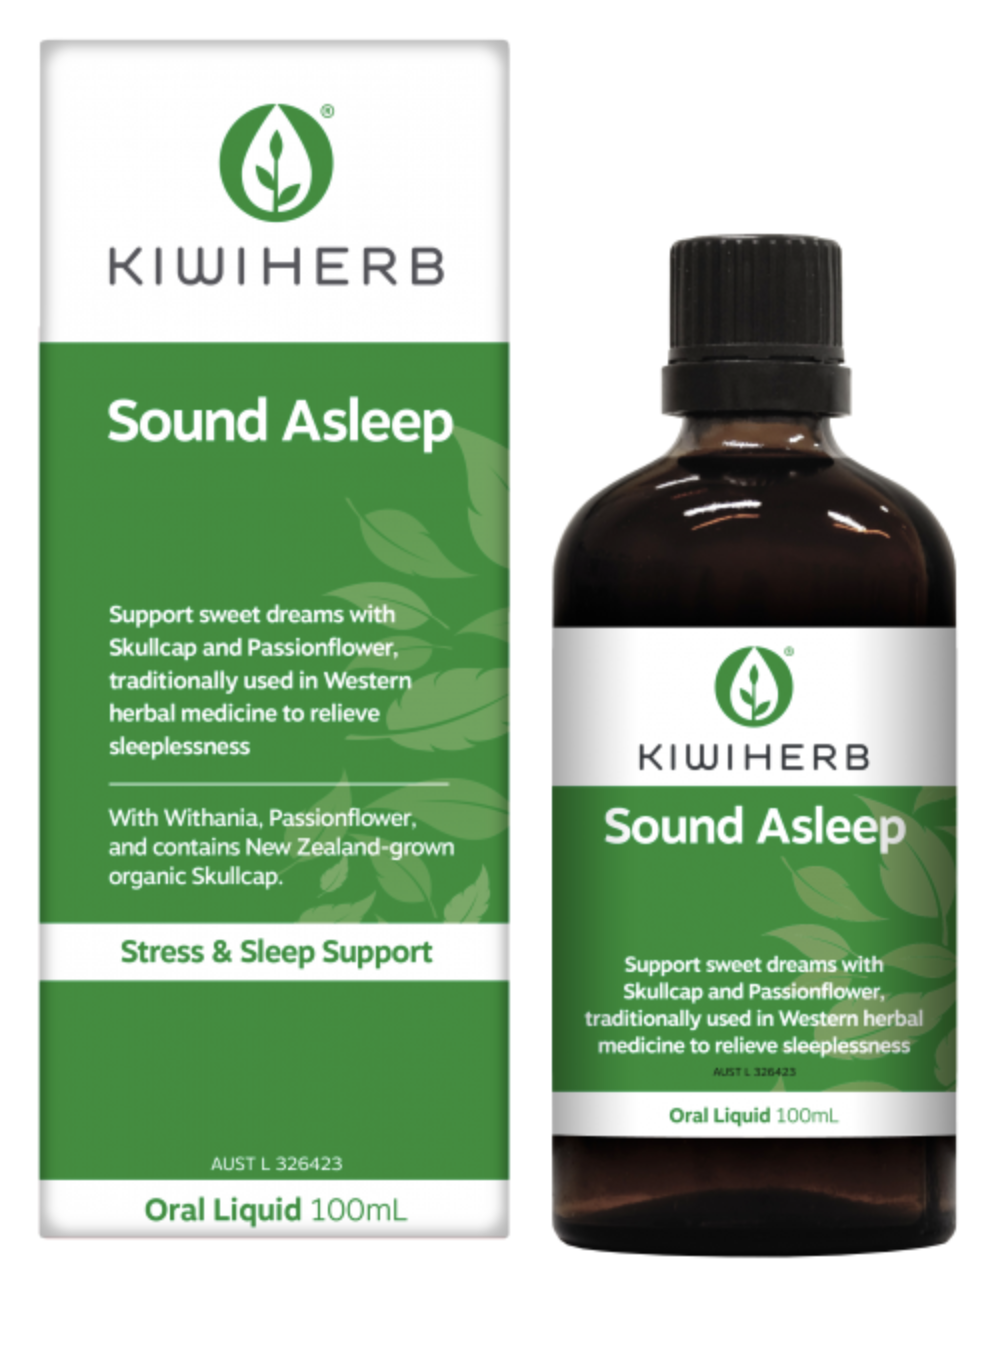 Kiwiherb Sound Asleep 200mls